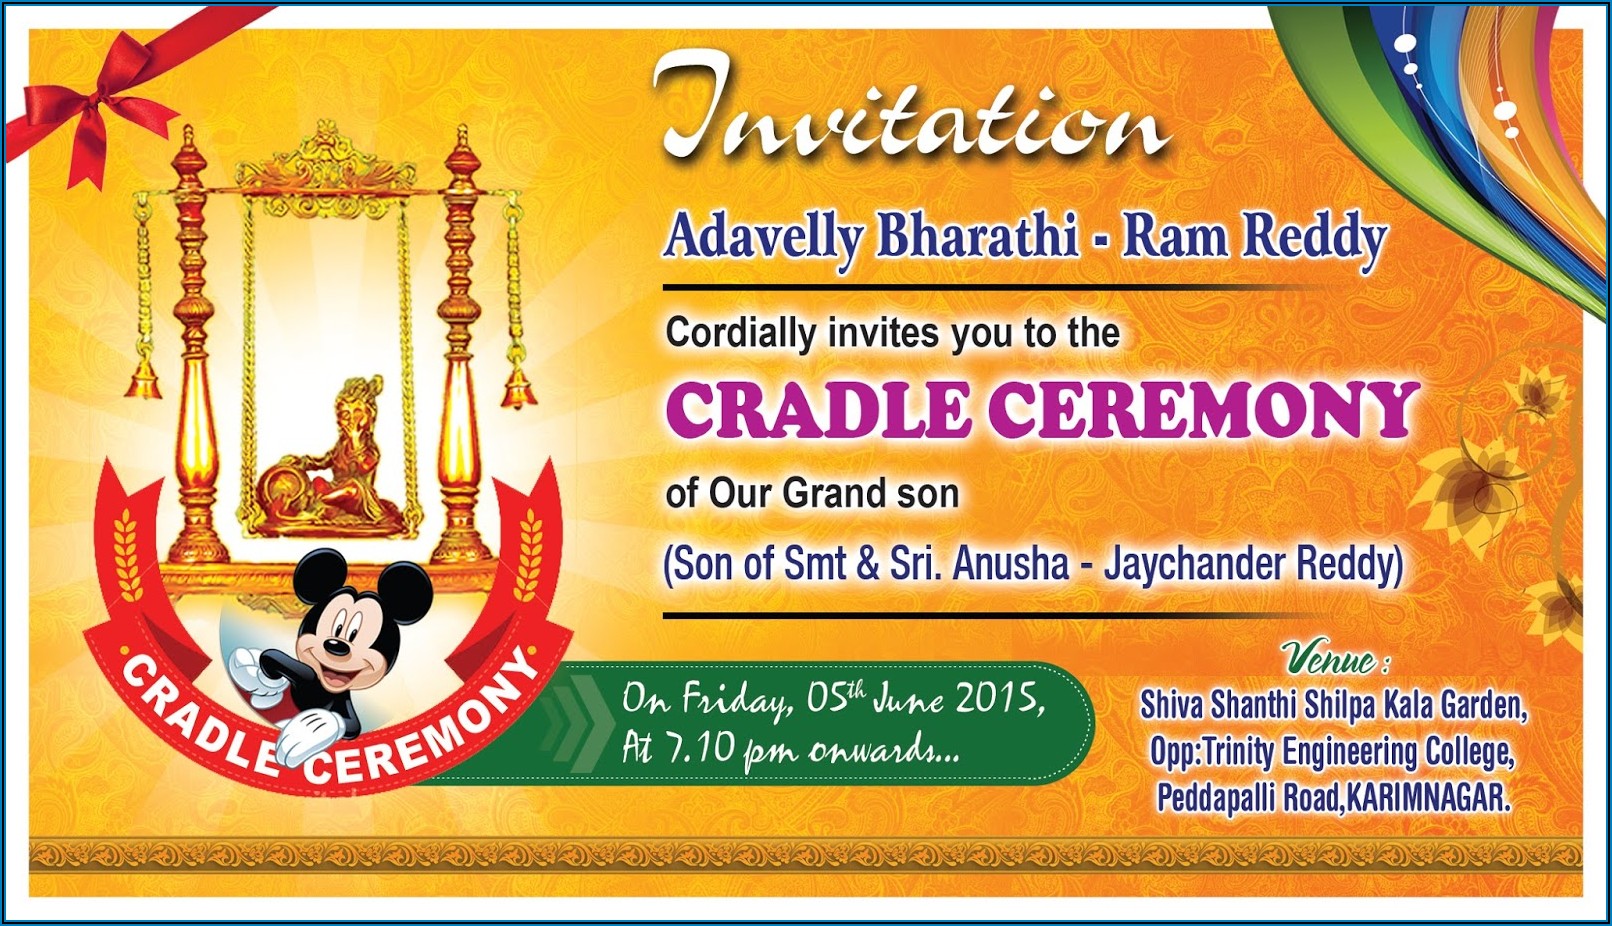 Cradle Ceremony Invitation Card Template